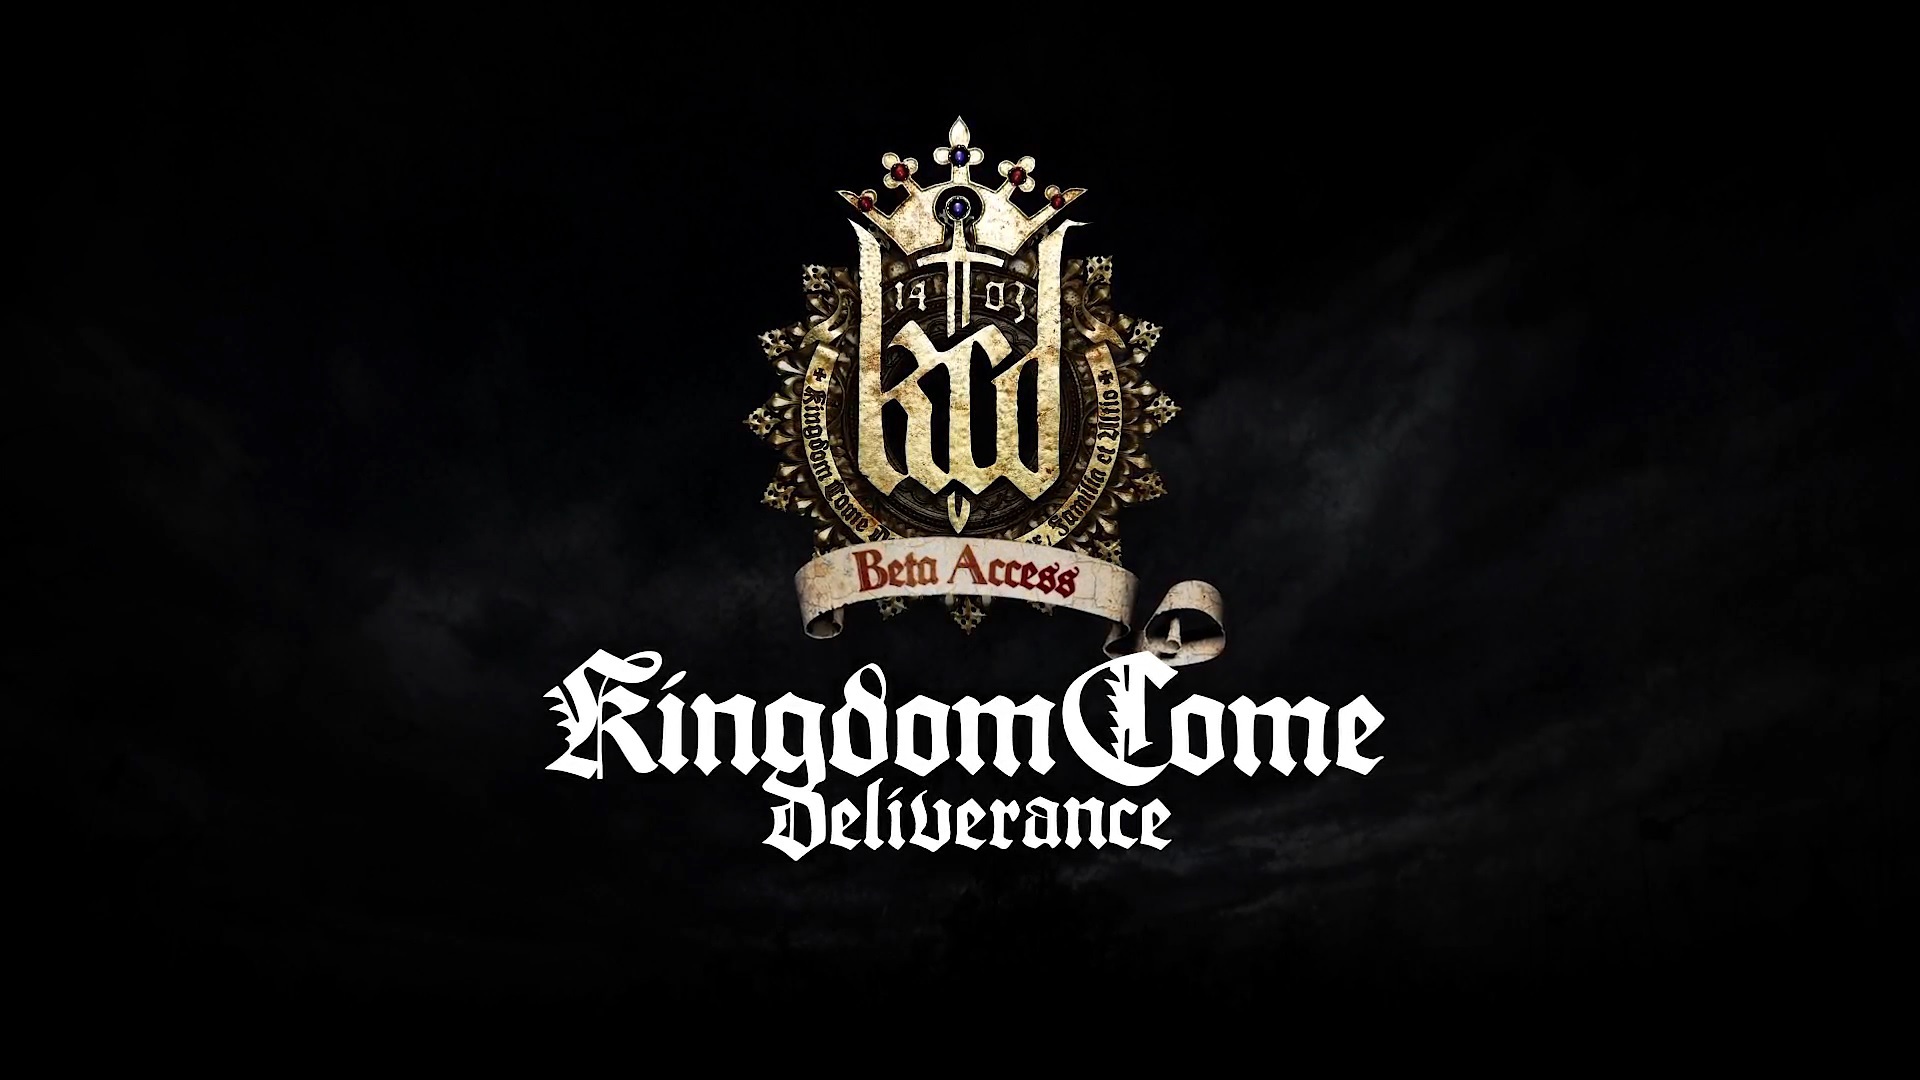 Kingdom E Deliverance Wallpaper Image Photos